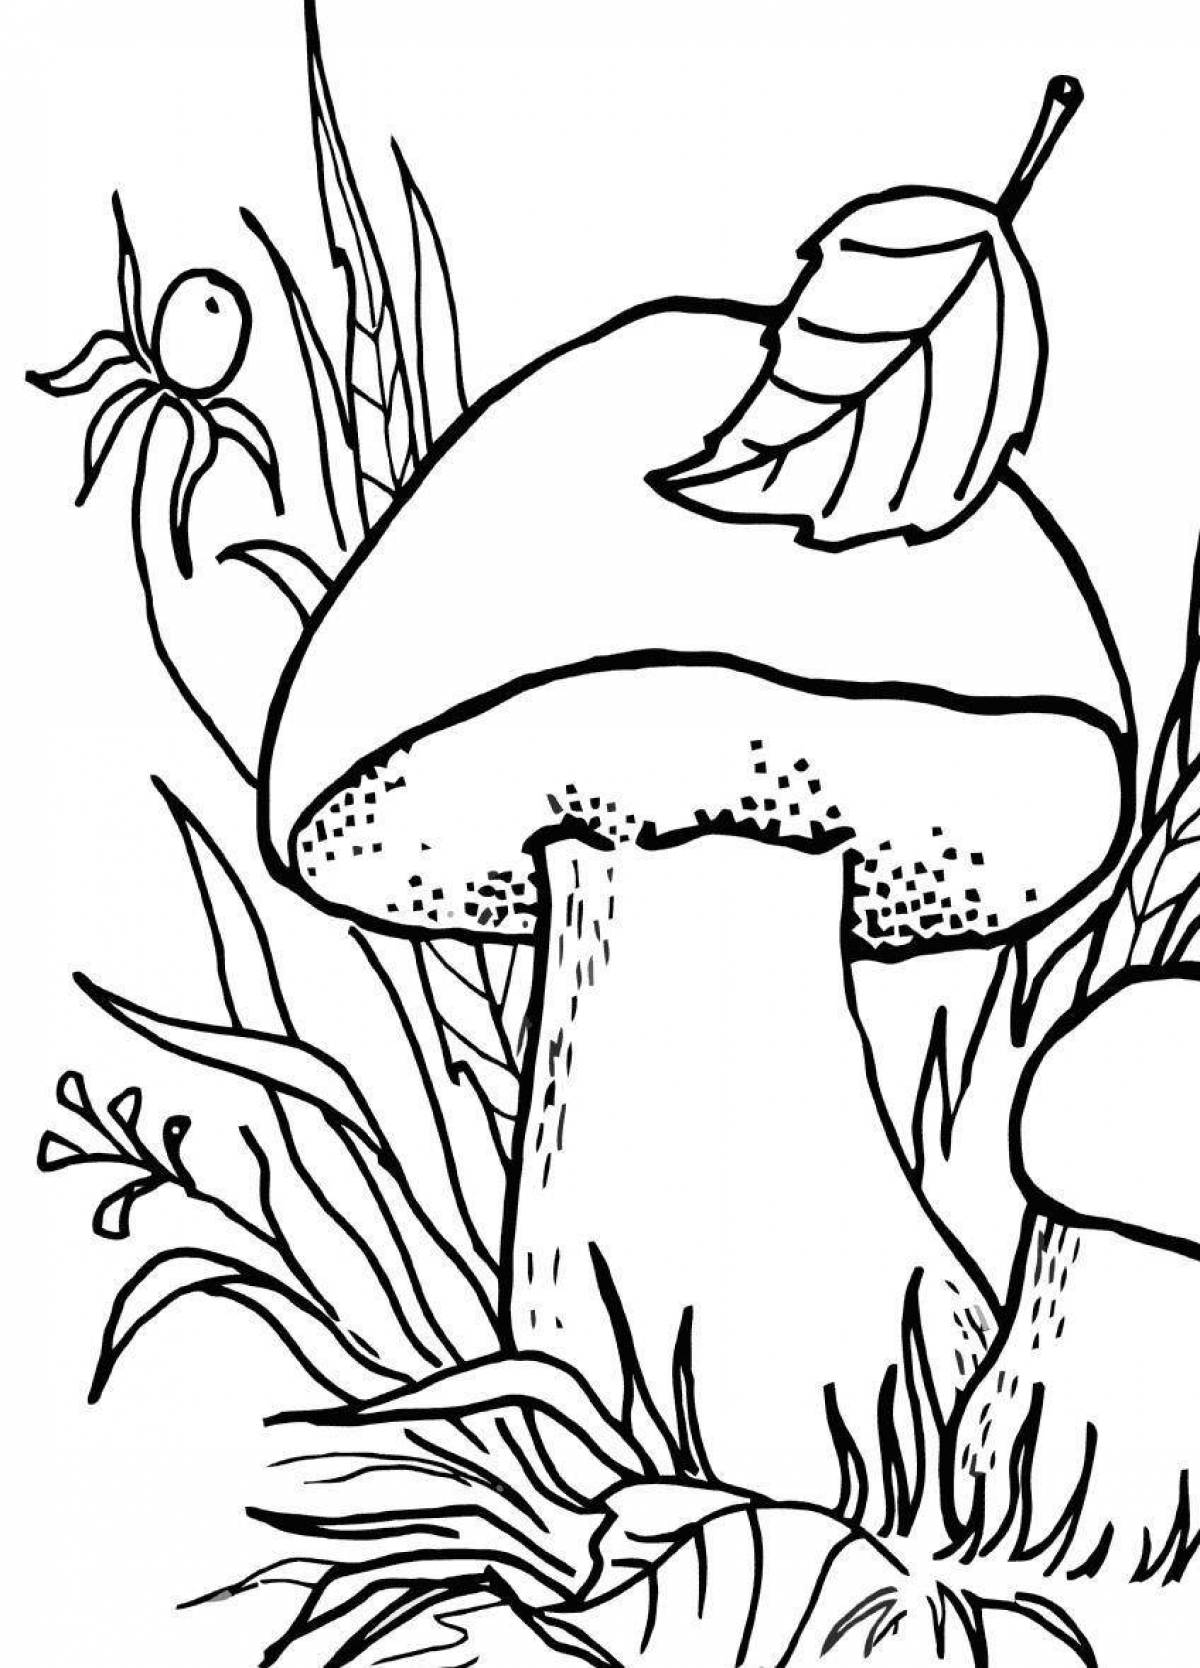 Rampant porcini mushroom coloring page